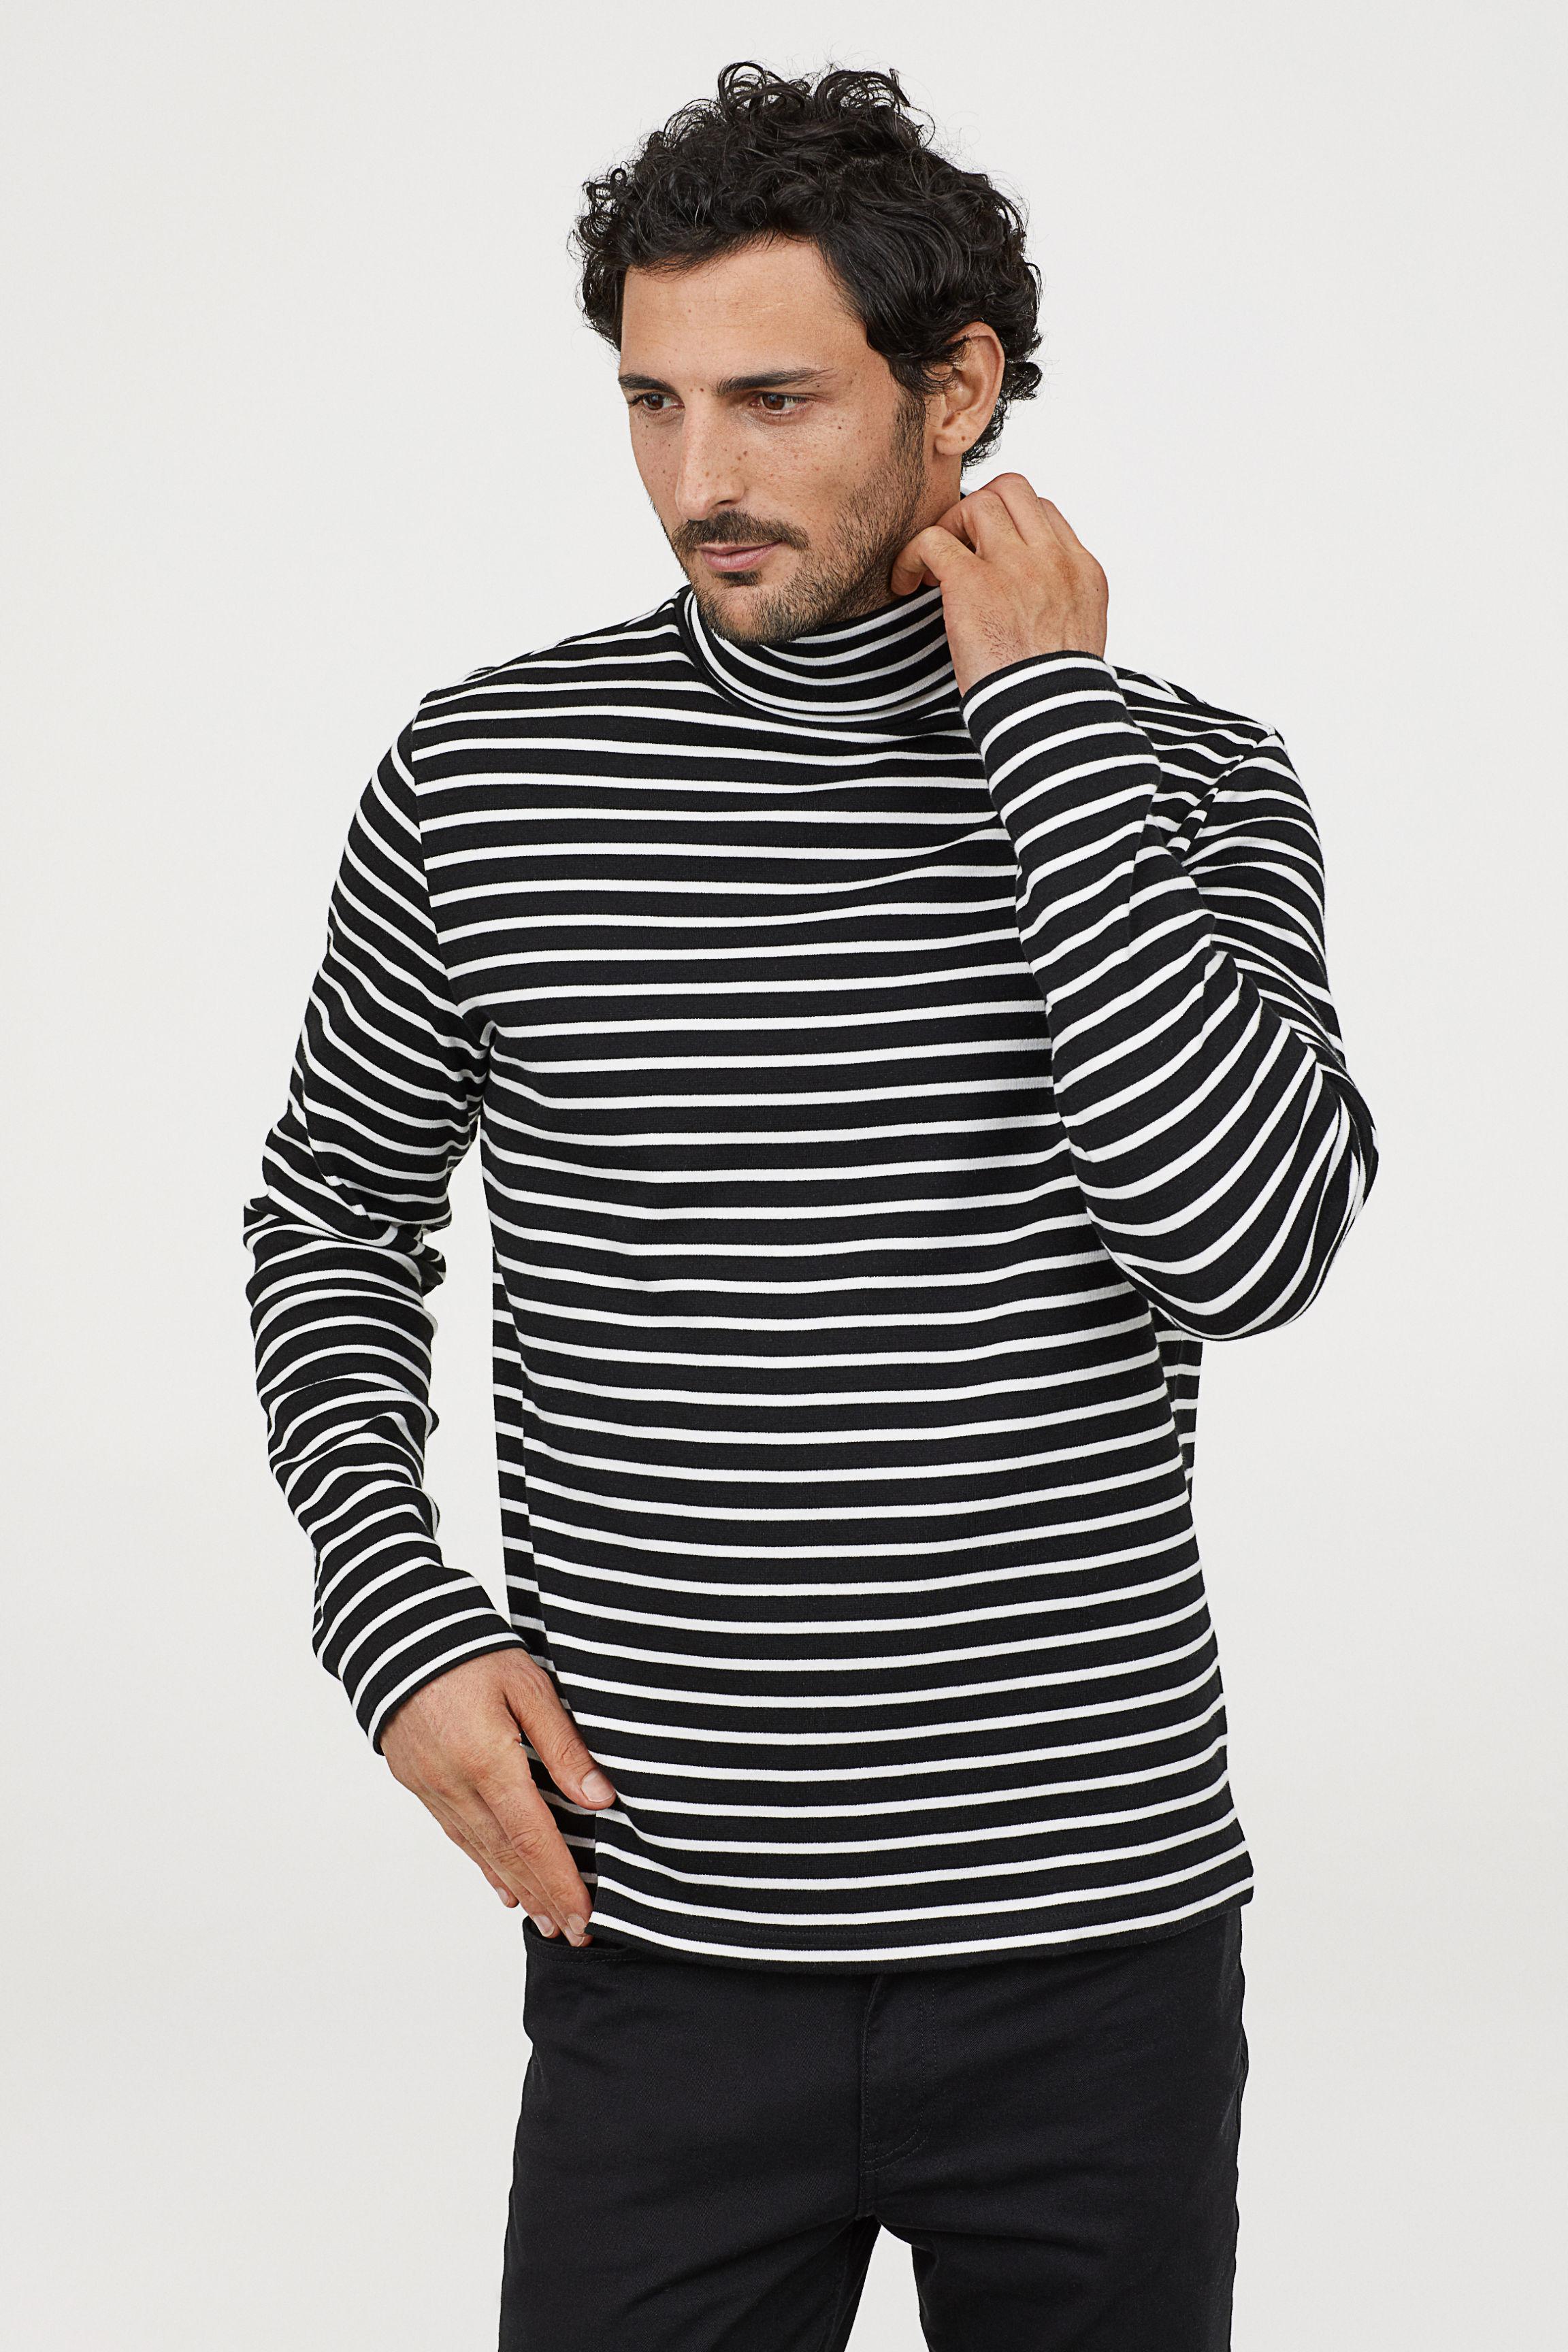 Turtleneck T-shirt Blouse Tops Cotton blends Mens Striped Casual Shirt 